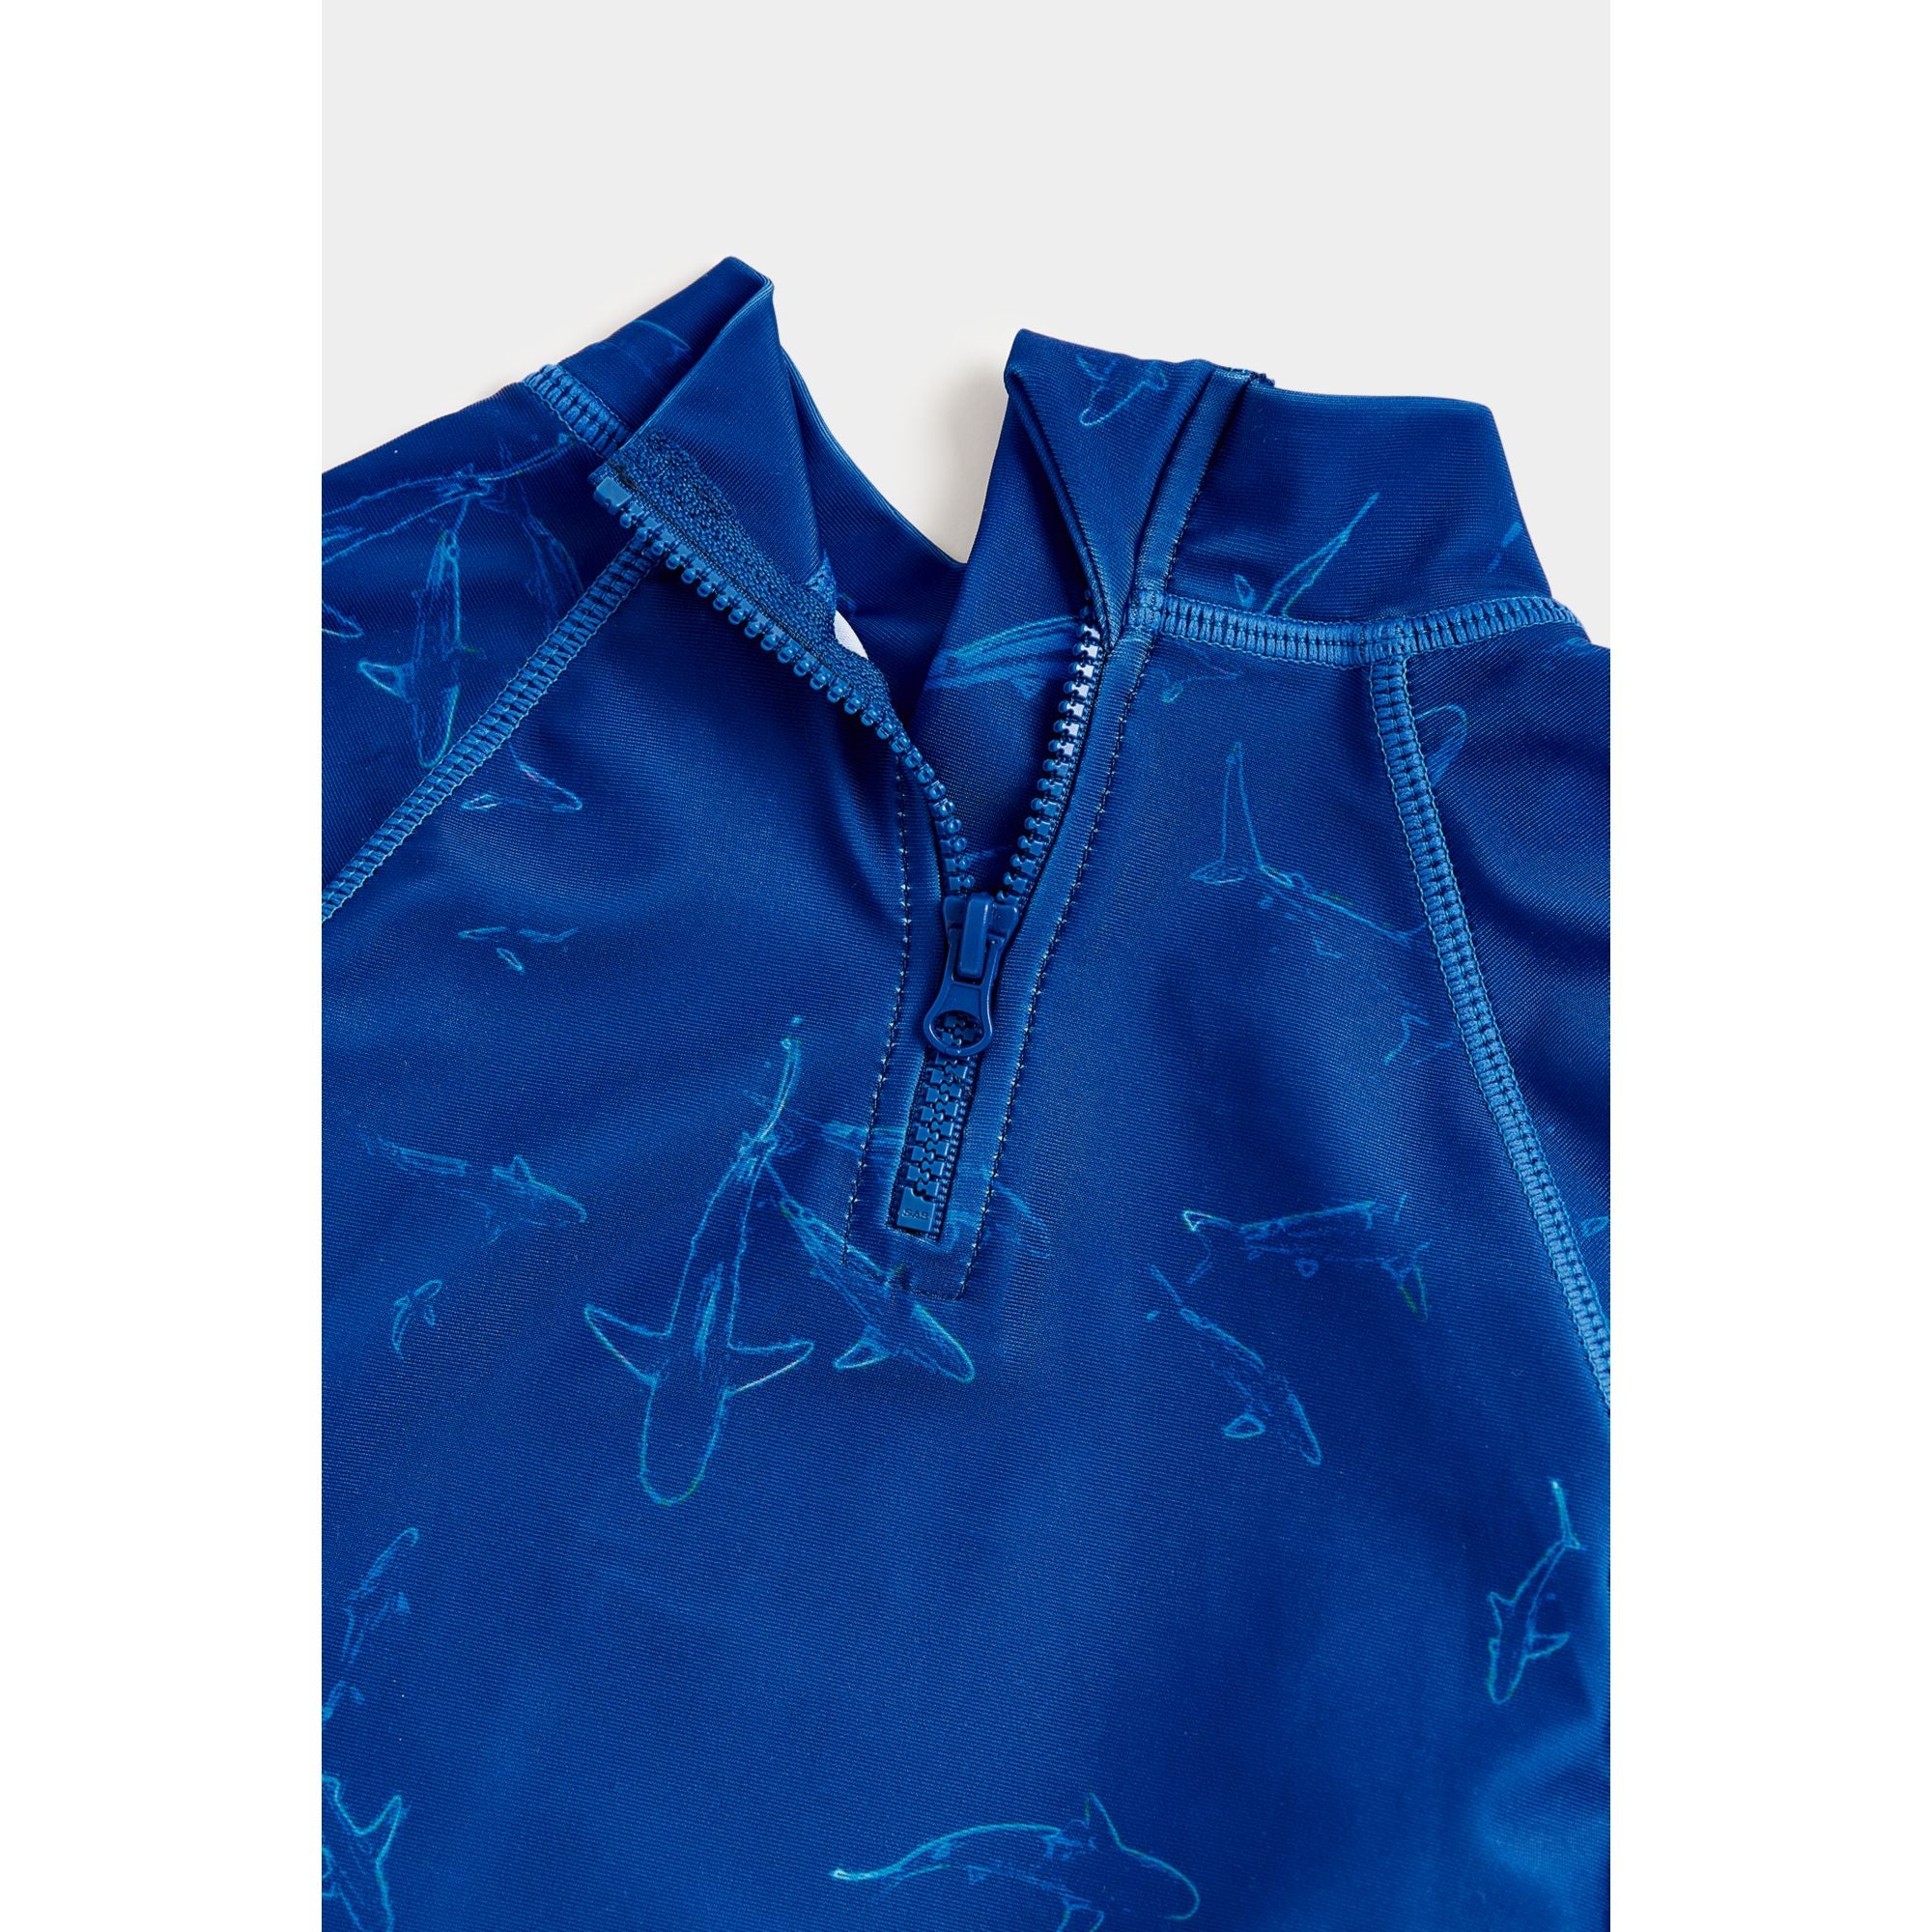 Mothercare Shark Sunsafe Rash Vest and Shorts